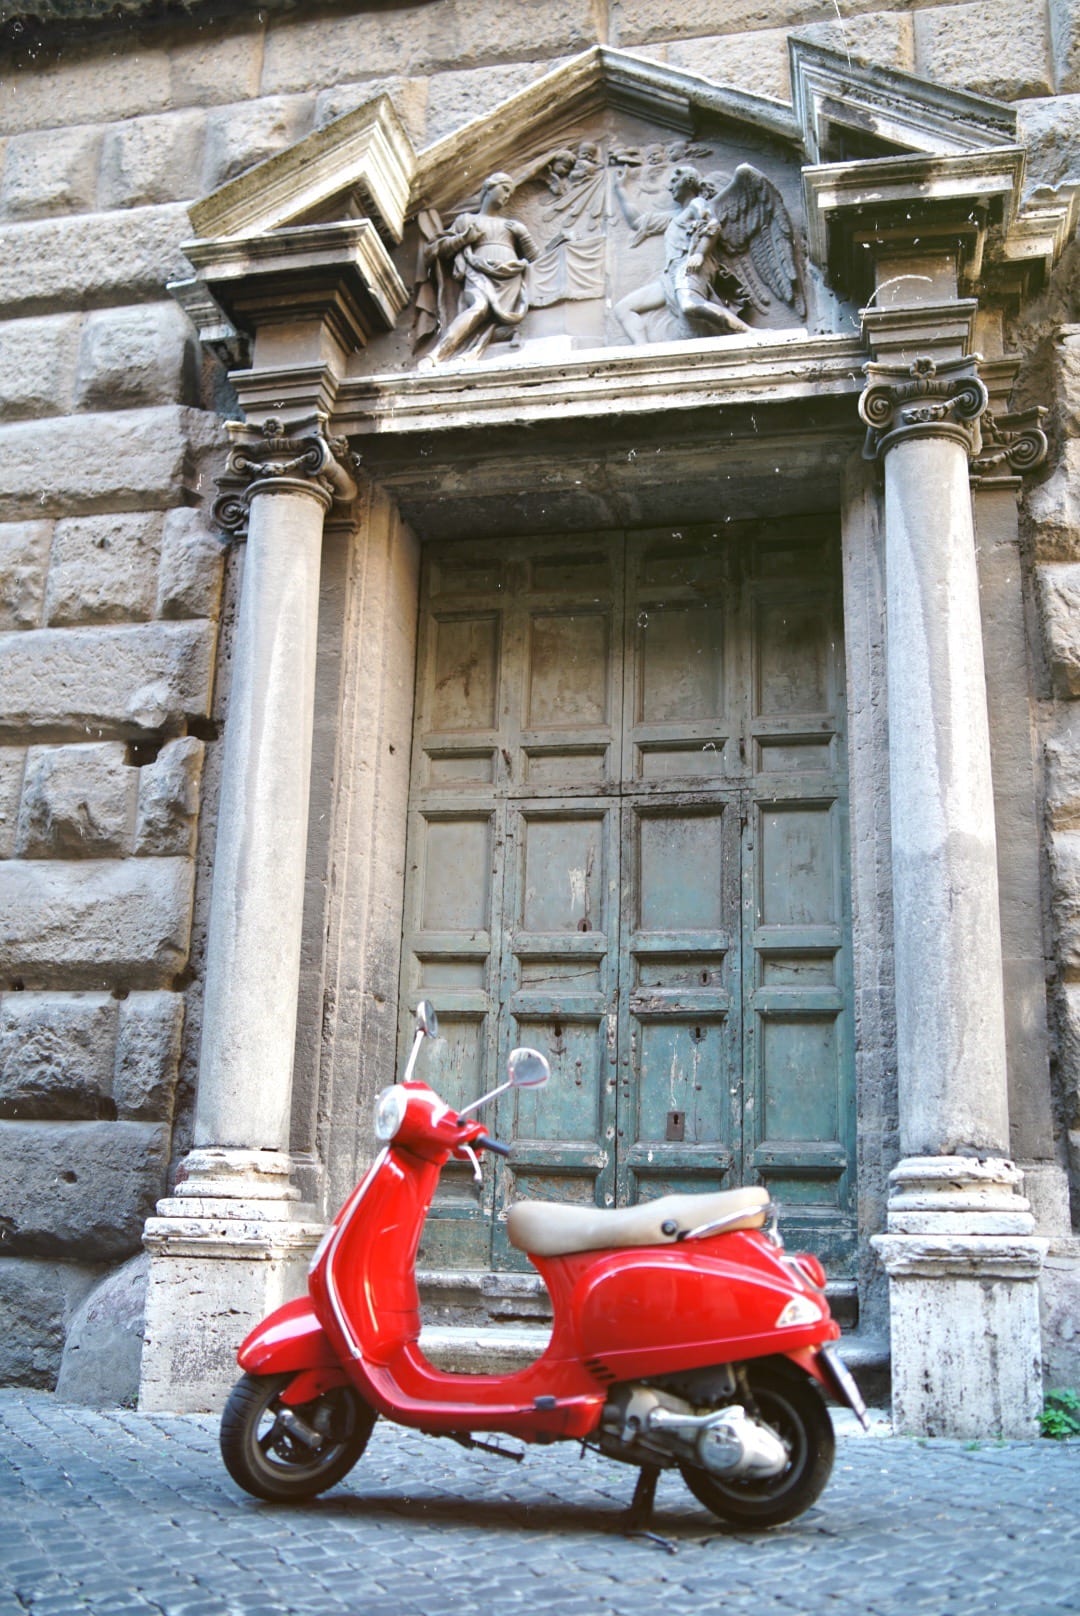 Roman doors, Roman architecture, Vespa